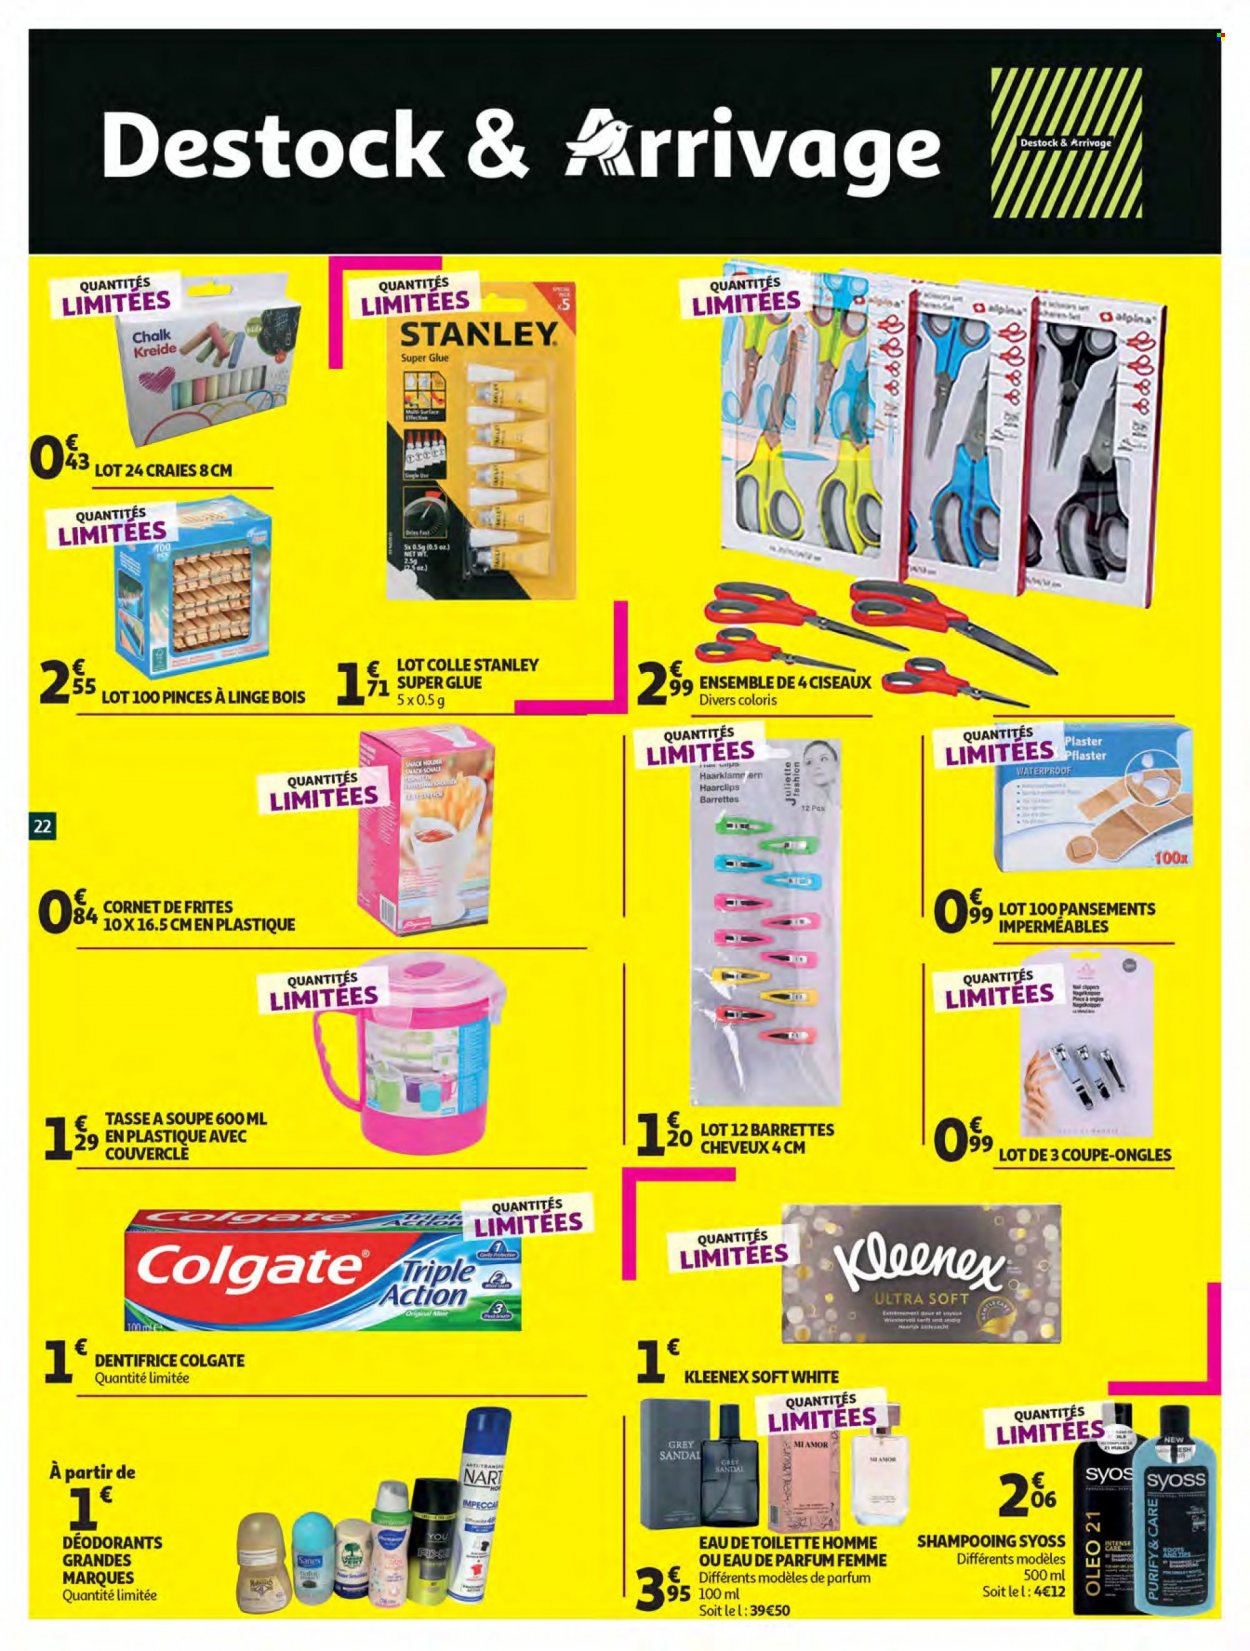 Catalogue Auchan - 20.10.2021 - 31.10.2021. 